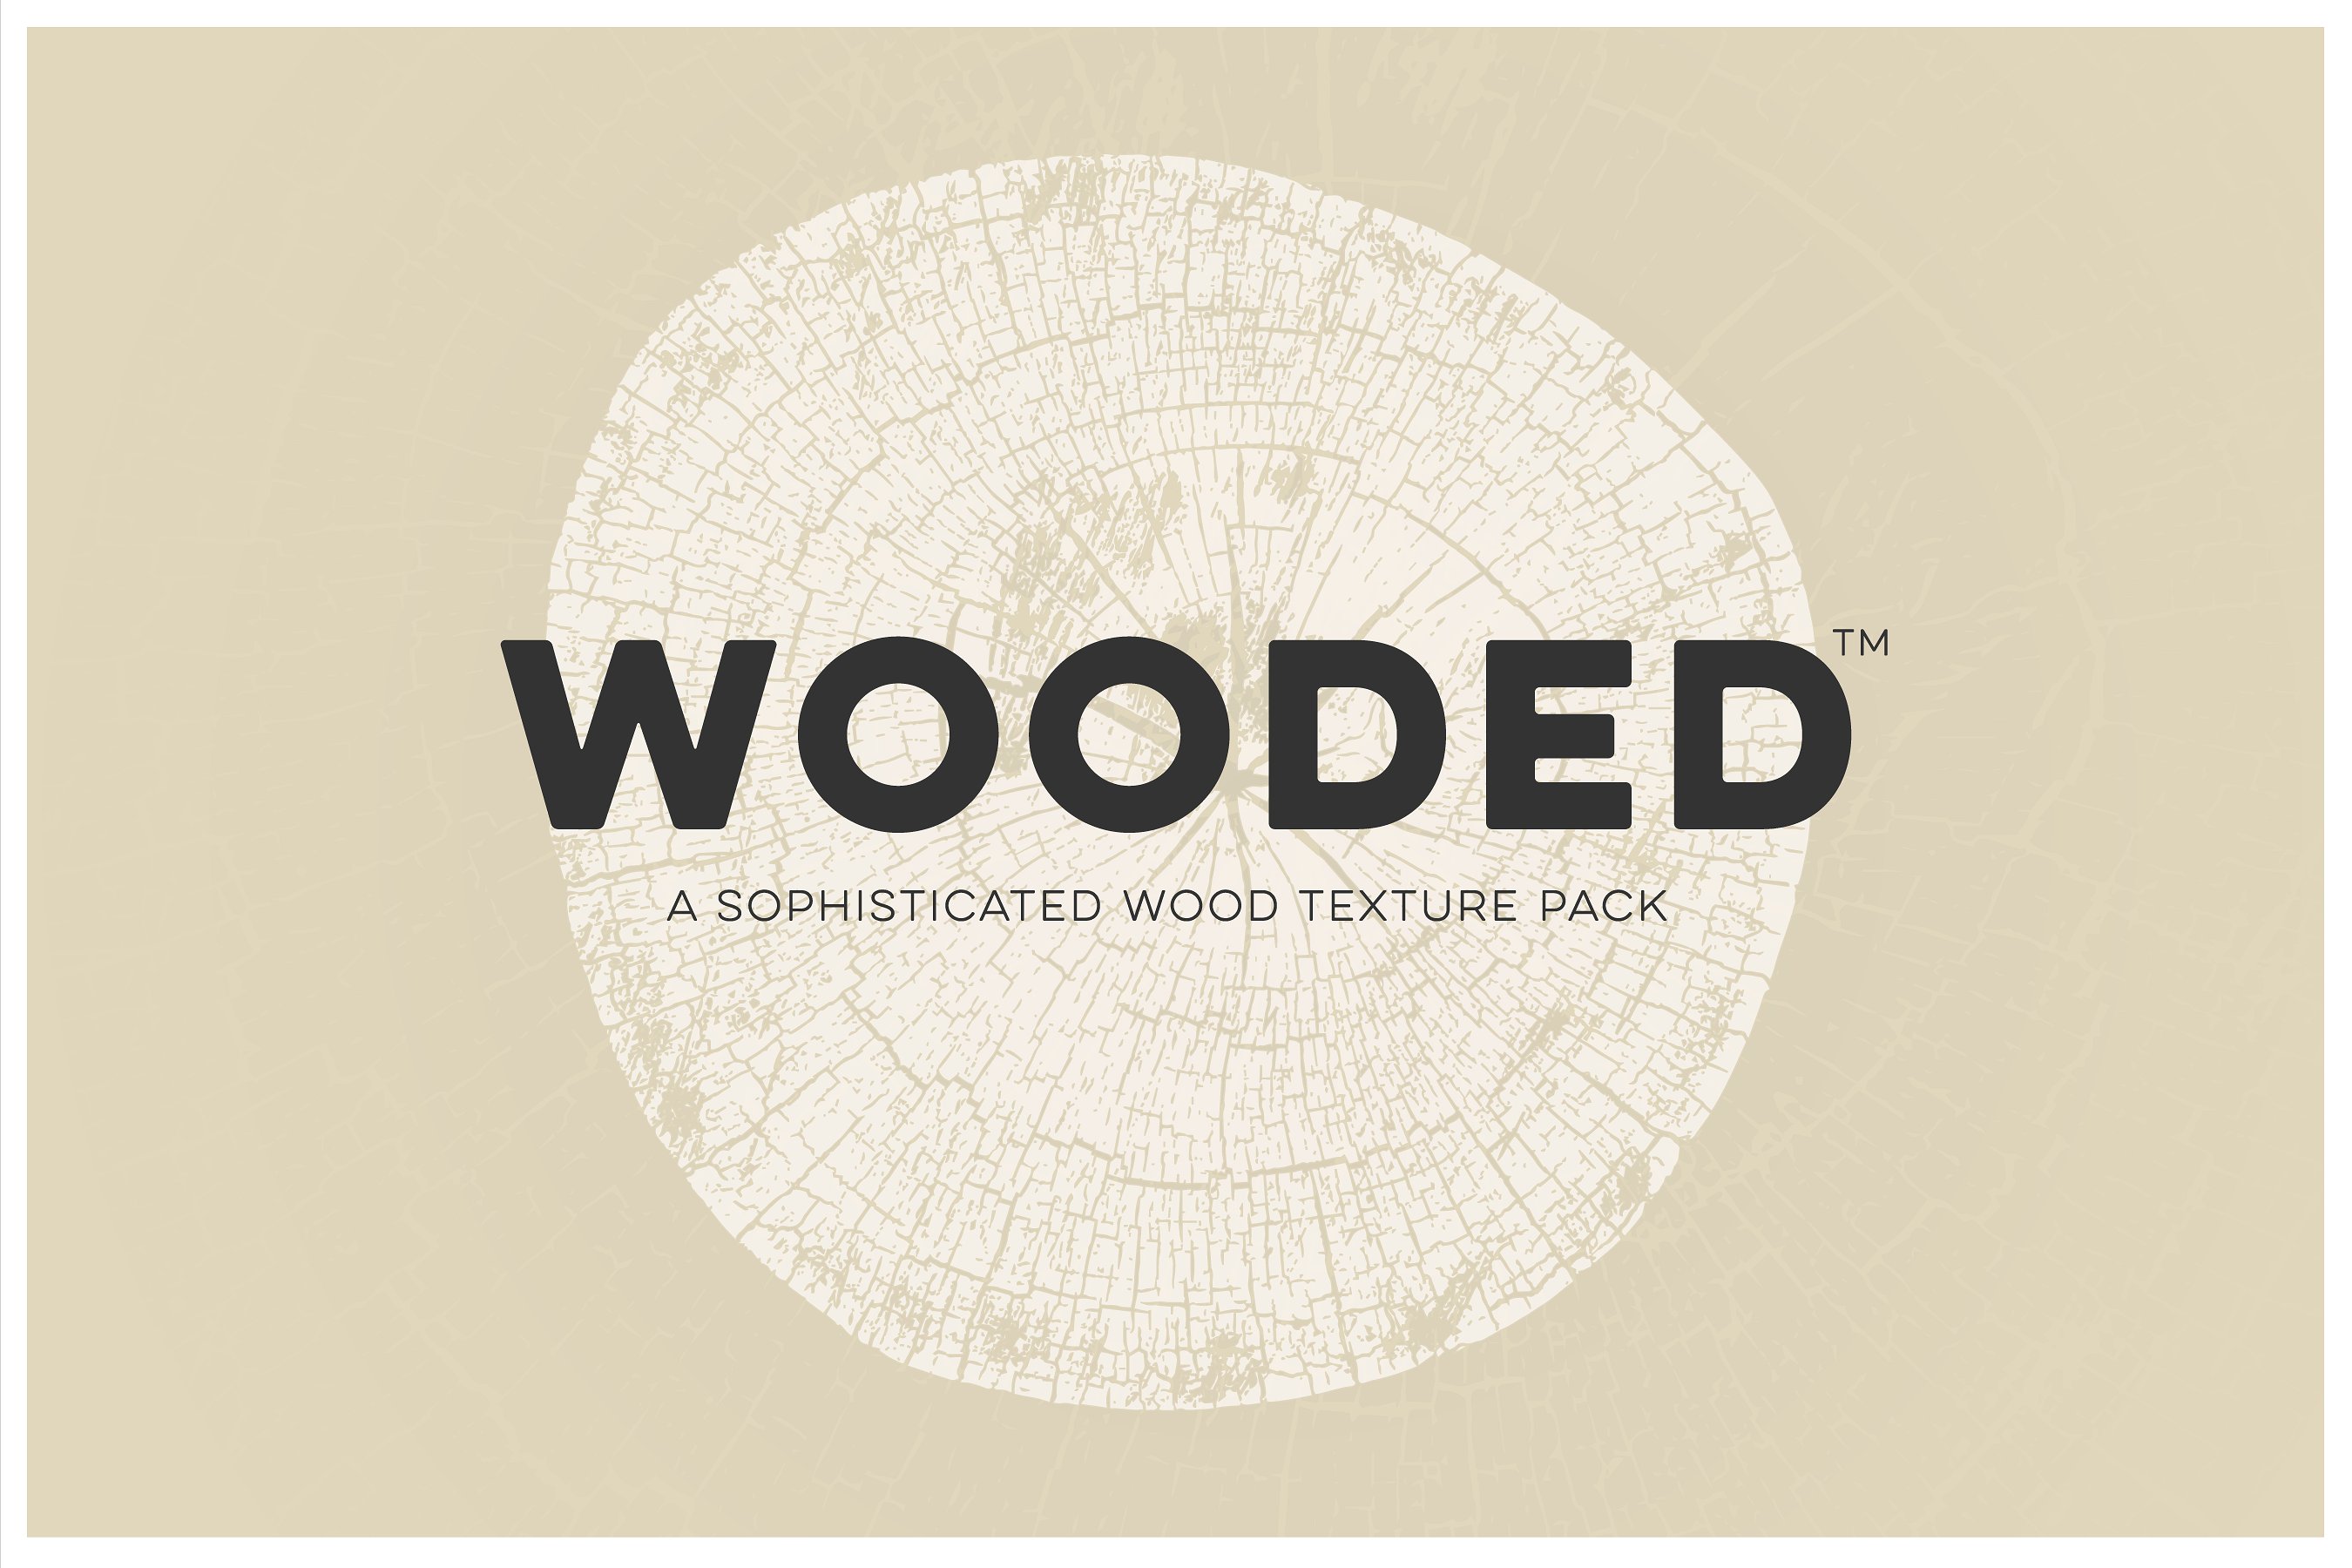 9款超高分辨率的垂直木纹纹理 9 Ultra-High Resolution Vertical Wood Grain Textures插图